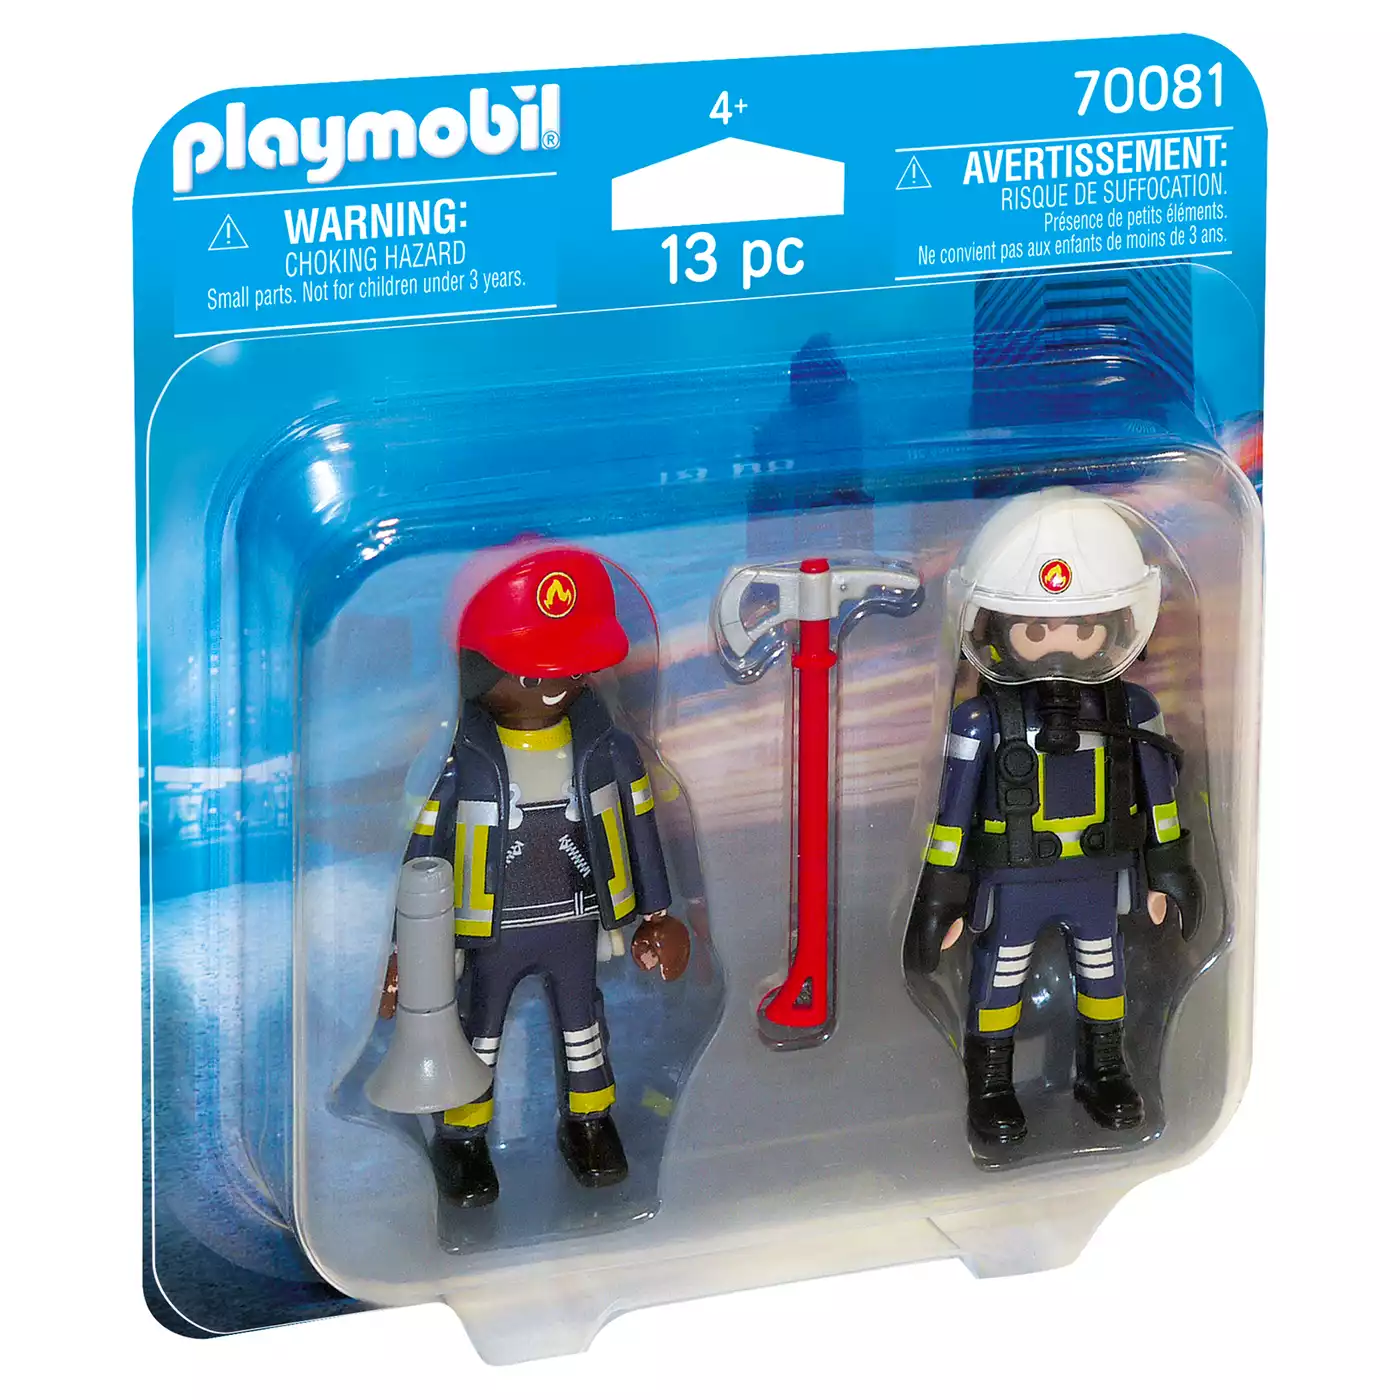 Duo Pack Feuerwehrmann und - Frau 70081 playmobil 2000576591405 4